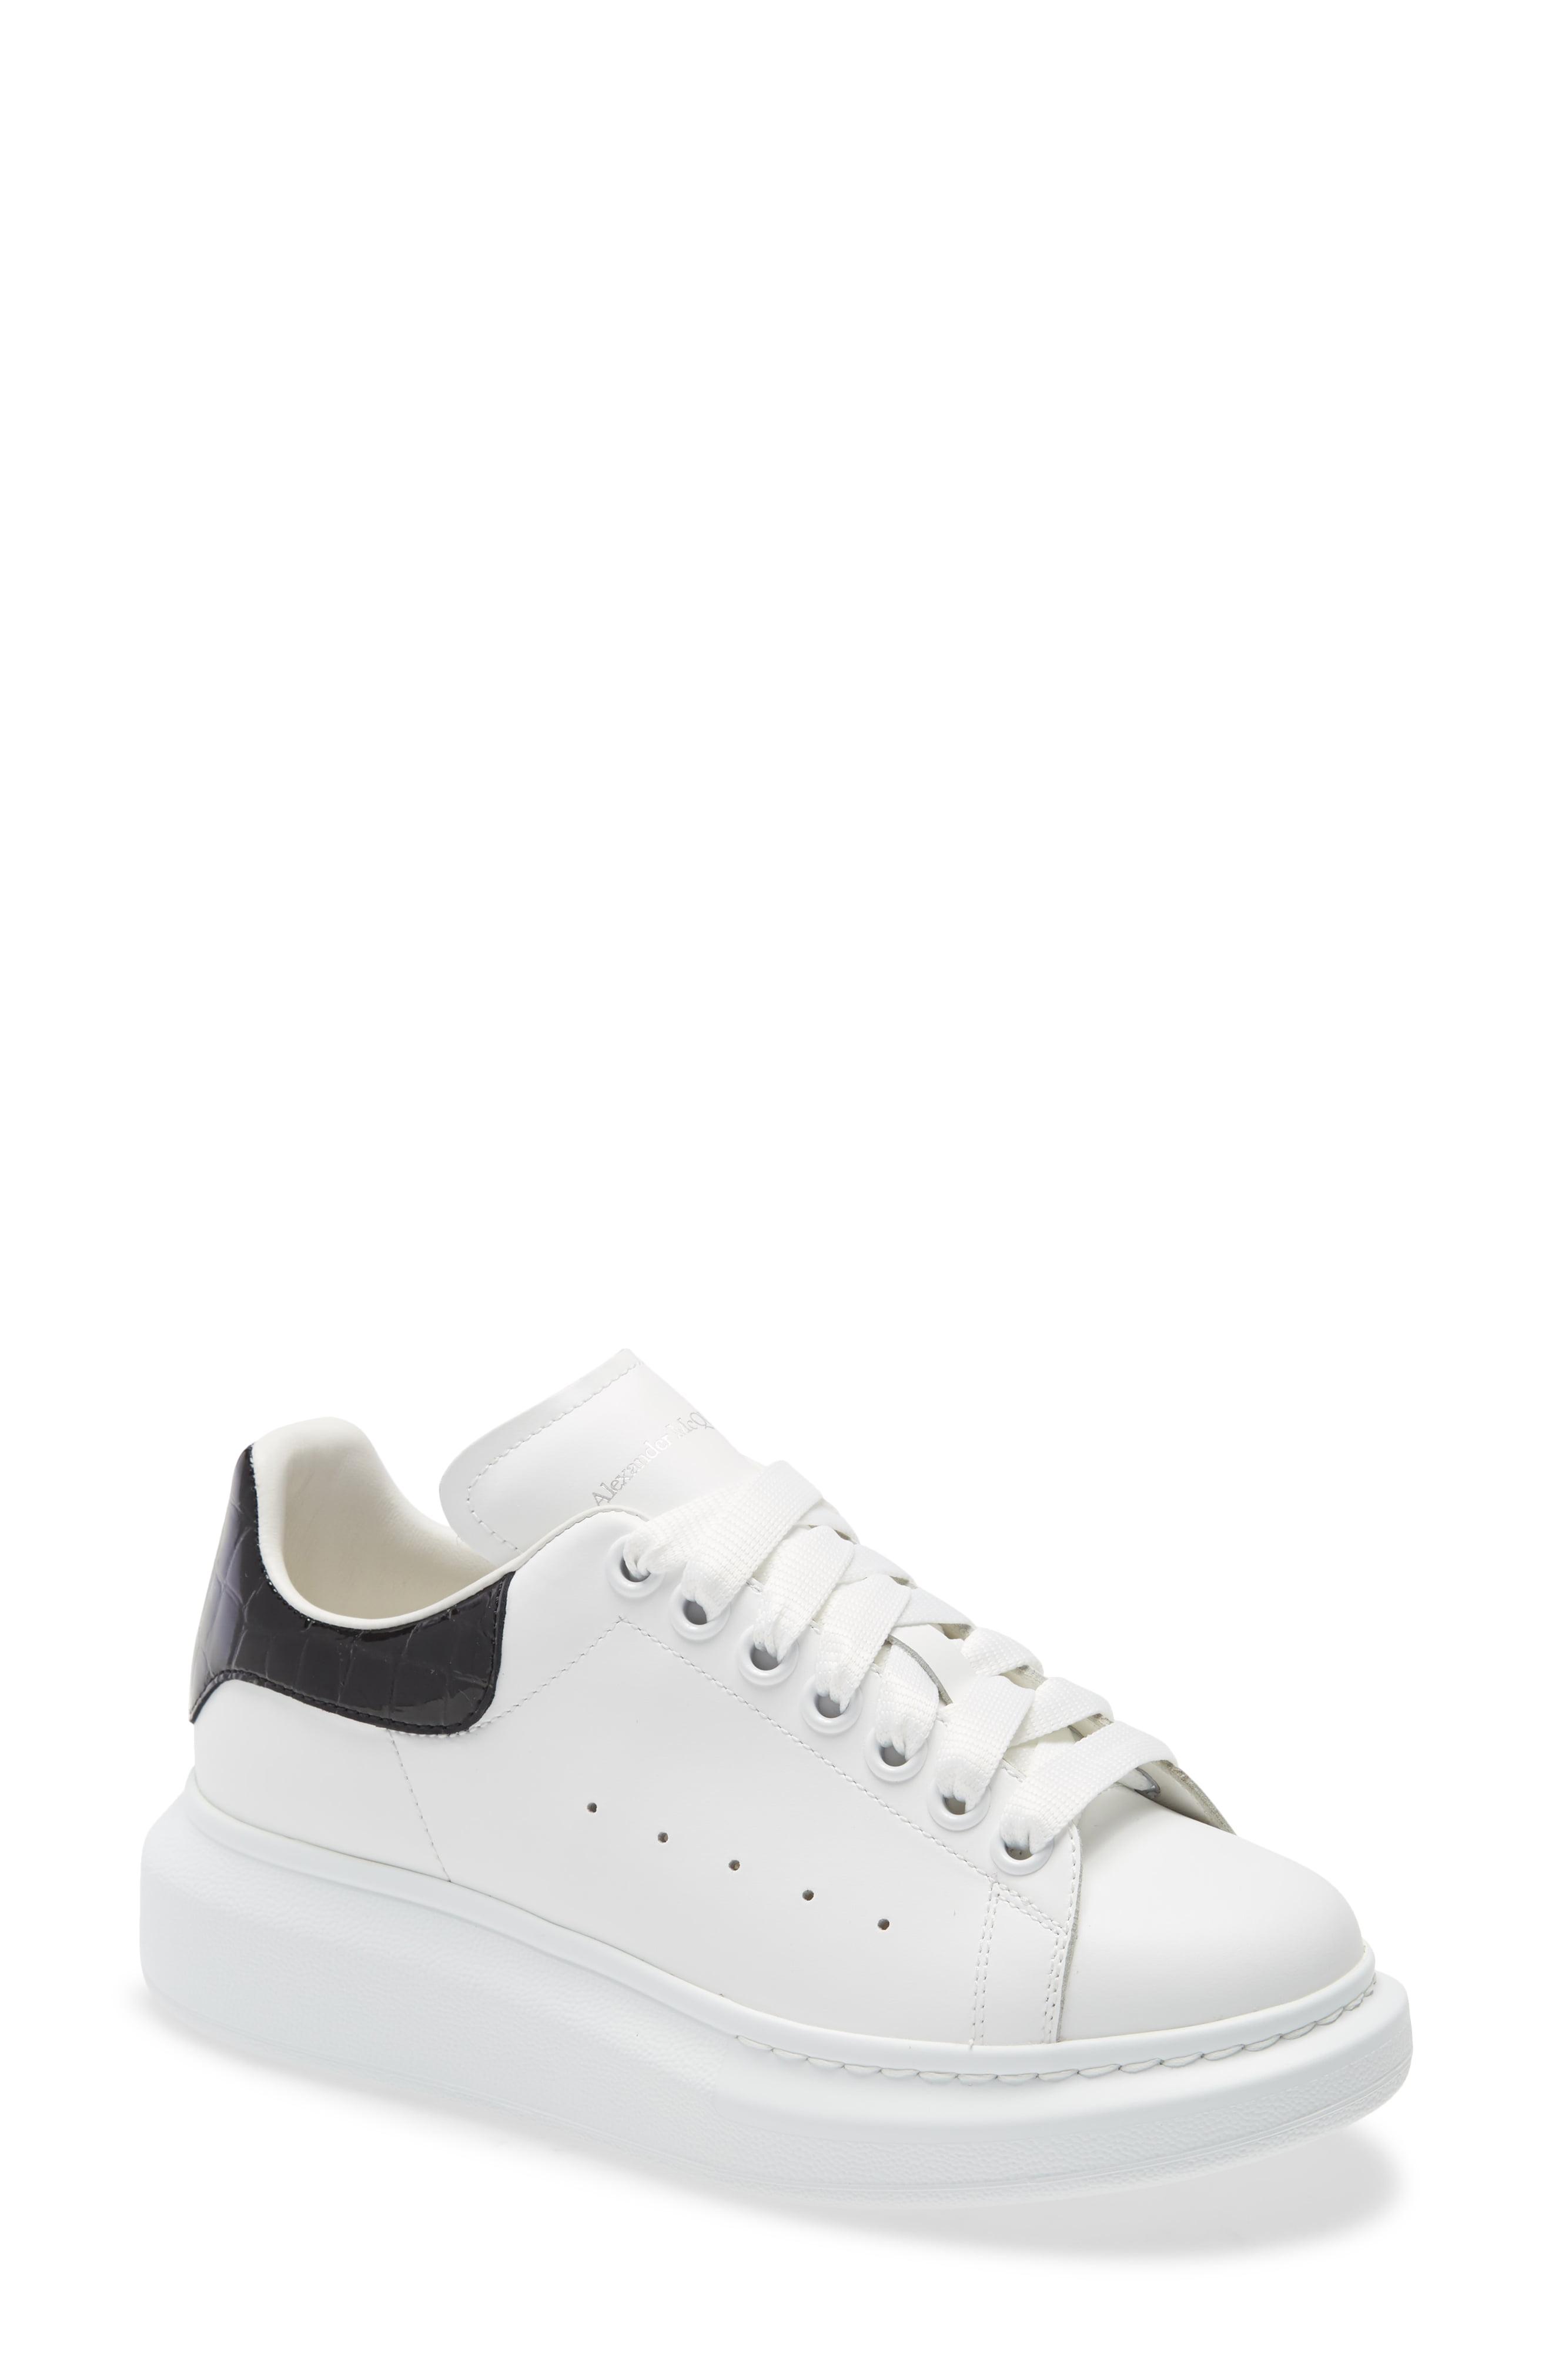 Alexander McQueen Suede & Leather Platform Sneakers in White/ Leopard ...